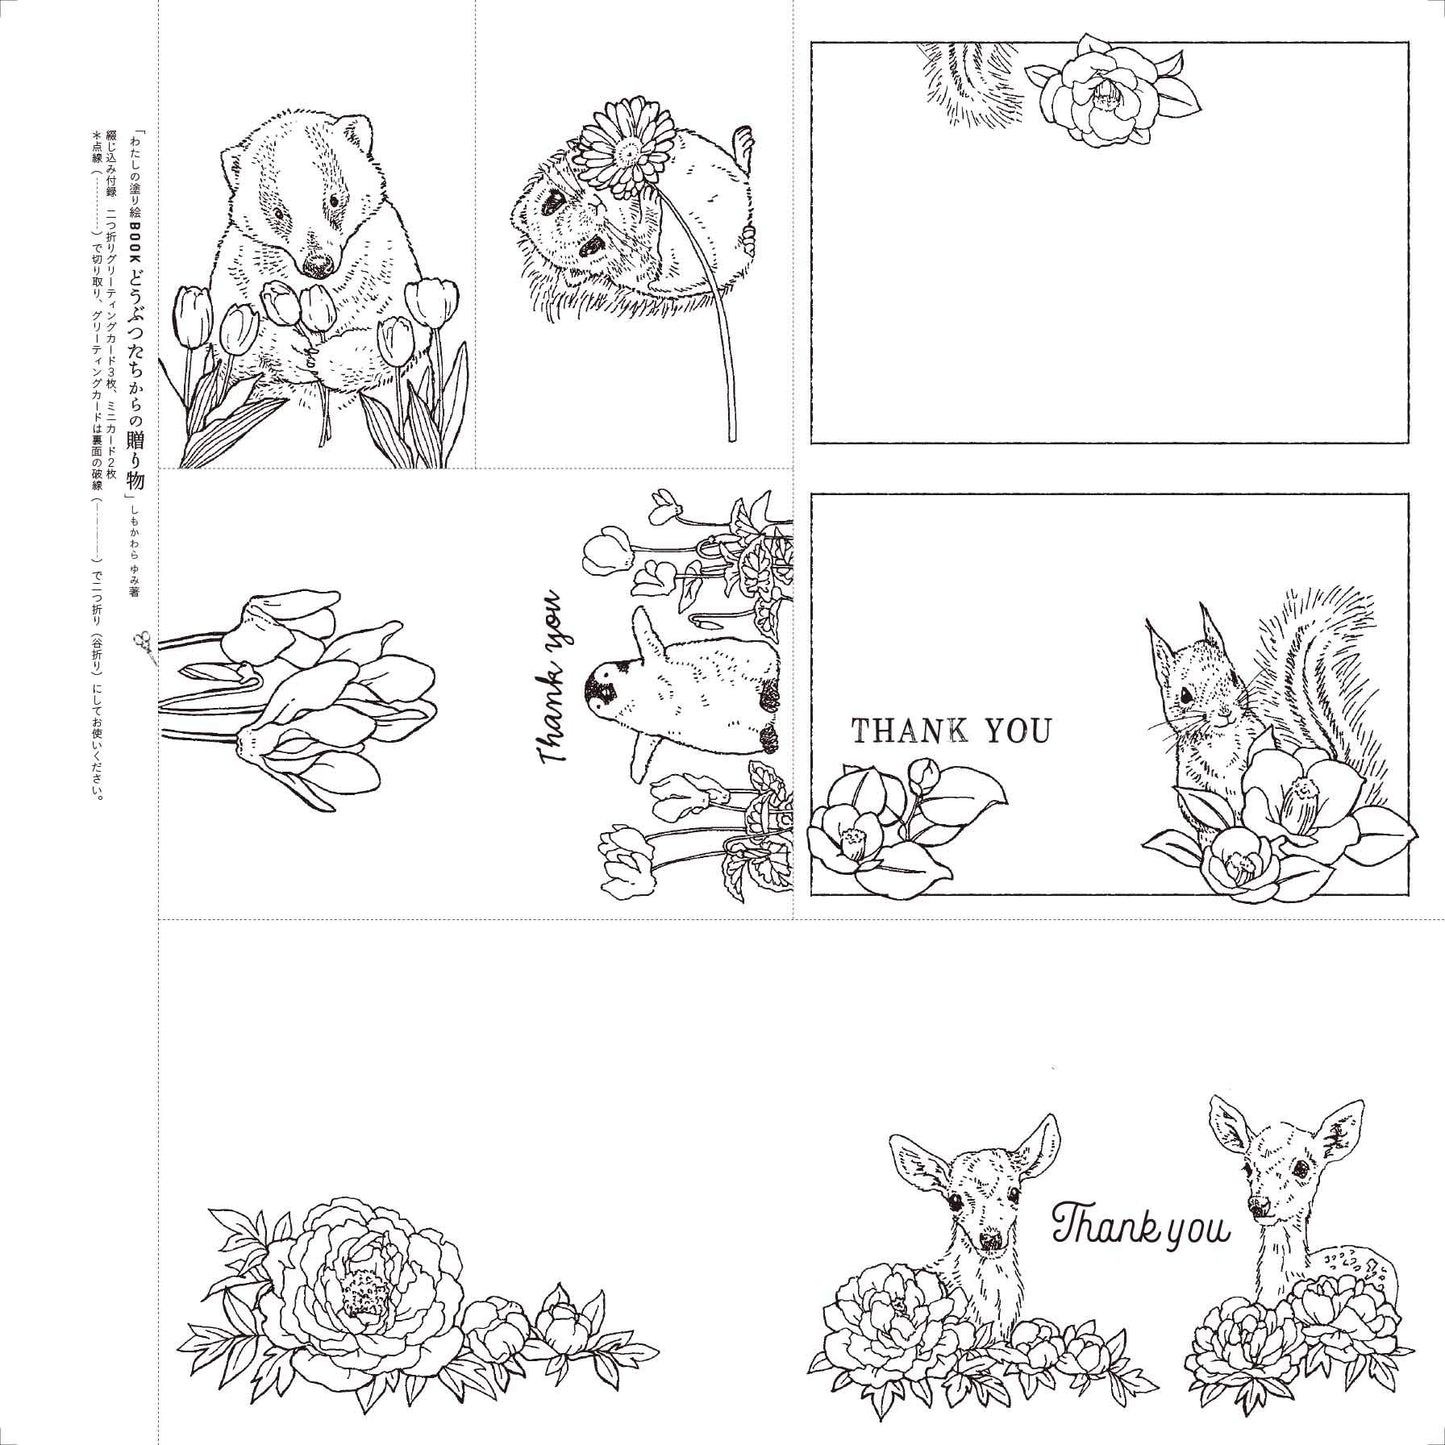 Birth of Animals and Flowers coloring book by Yumi Shimokawara